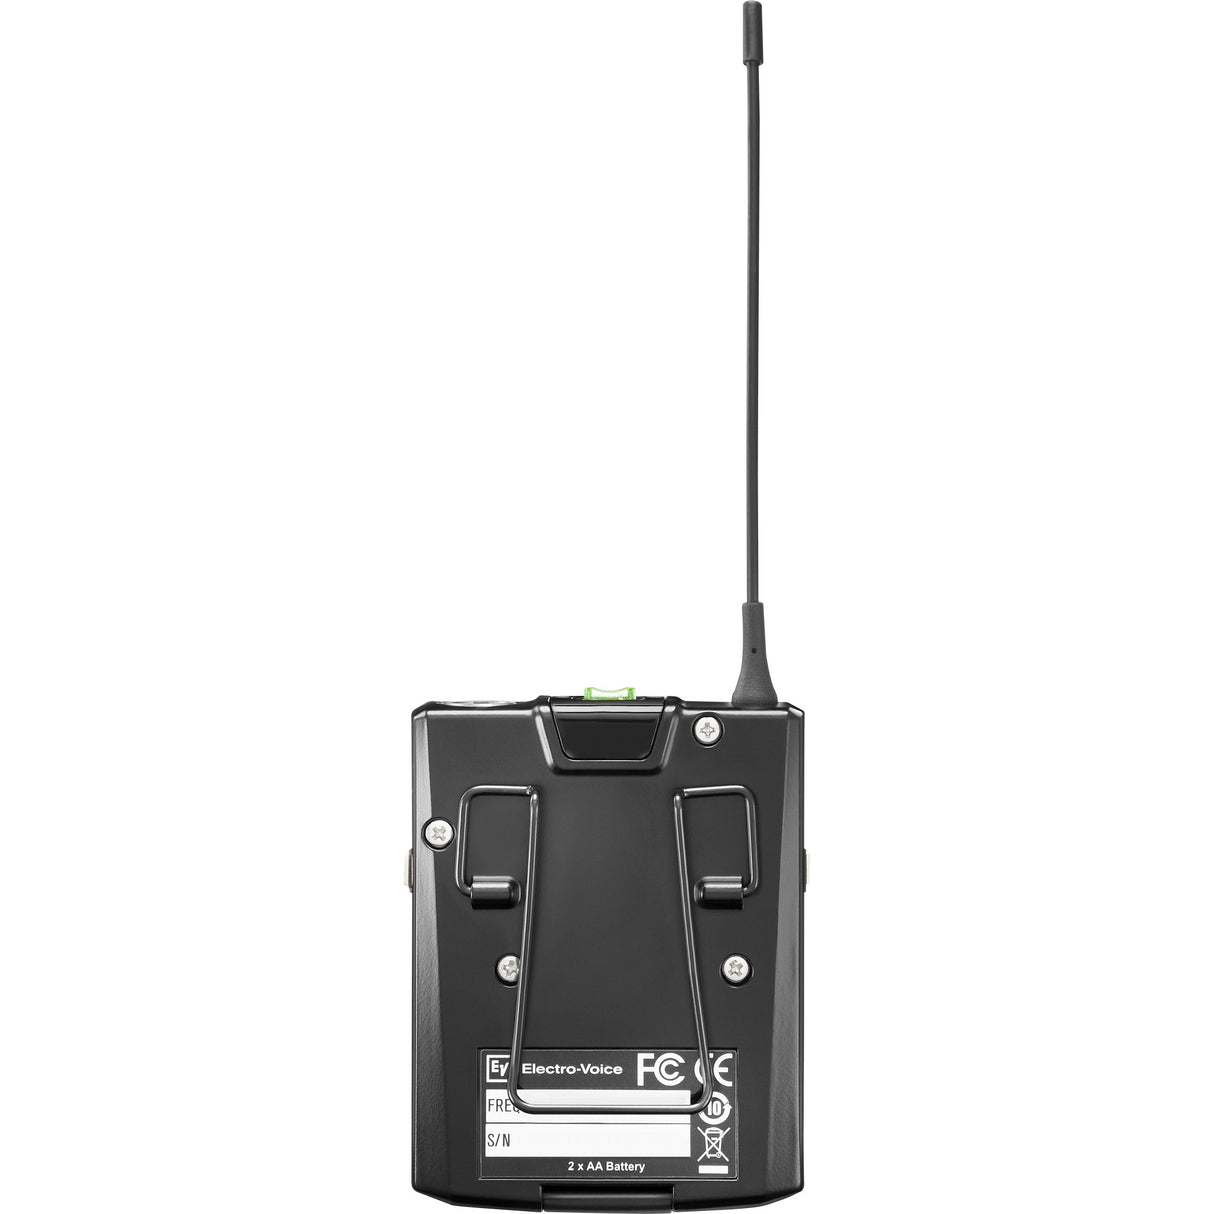 Electro-Voice RE3-BPTRSB-5L Wireless Bodypack Transmitter, 488-524MHz